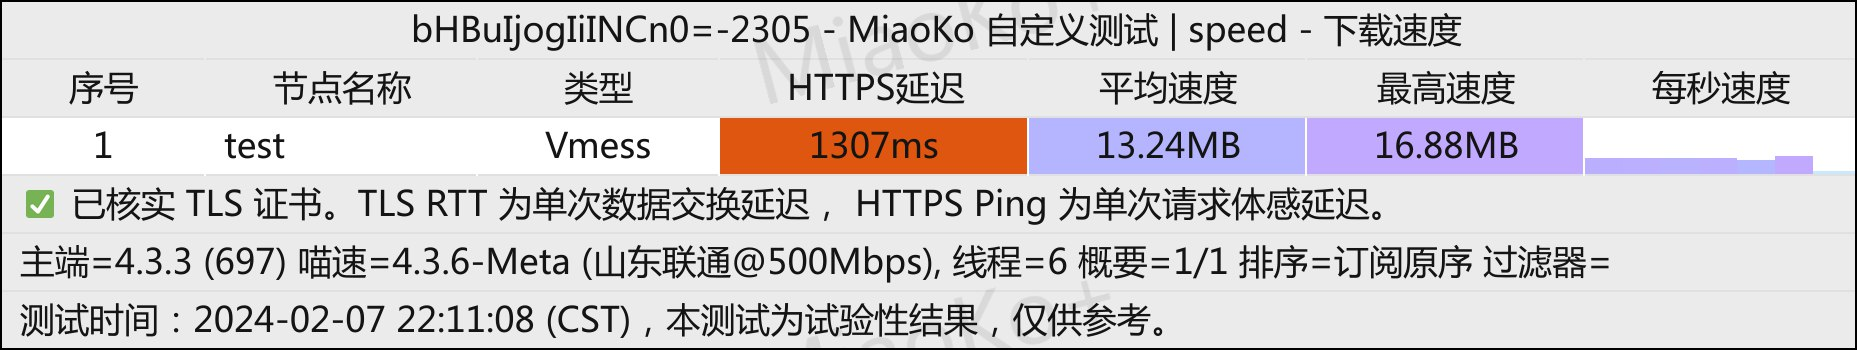 Haruka|香港vps测评|1TB@1Gbps|月付$4.5|解锁奈飞|最低7折